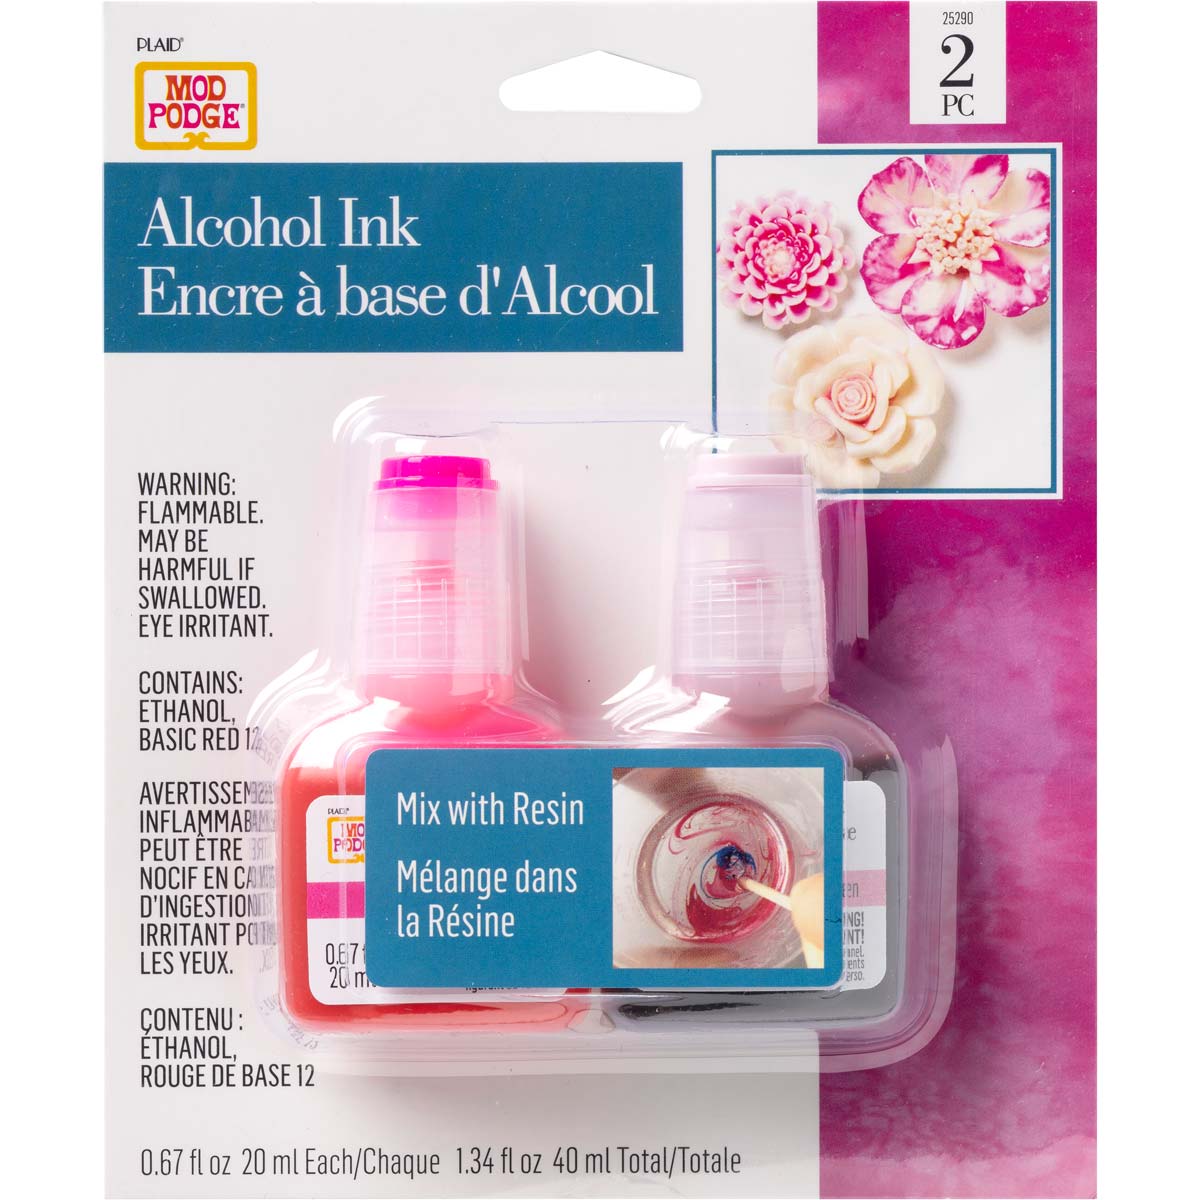 Mod Podge ® Alcohol Ink Set - Princess, 2 pc. - 25290